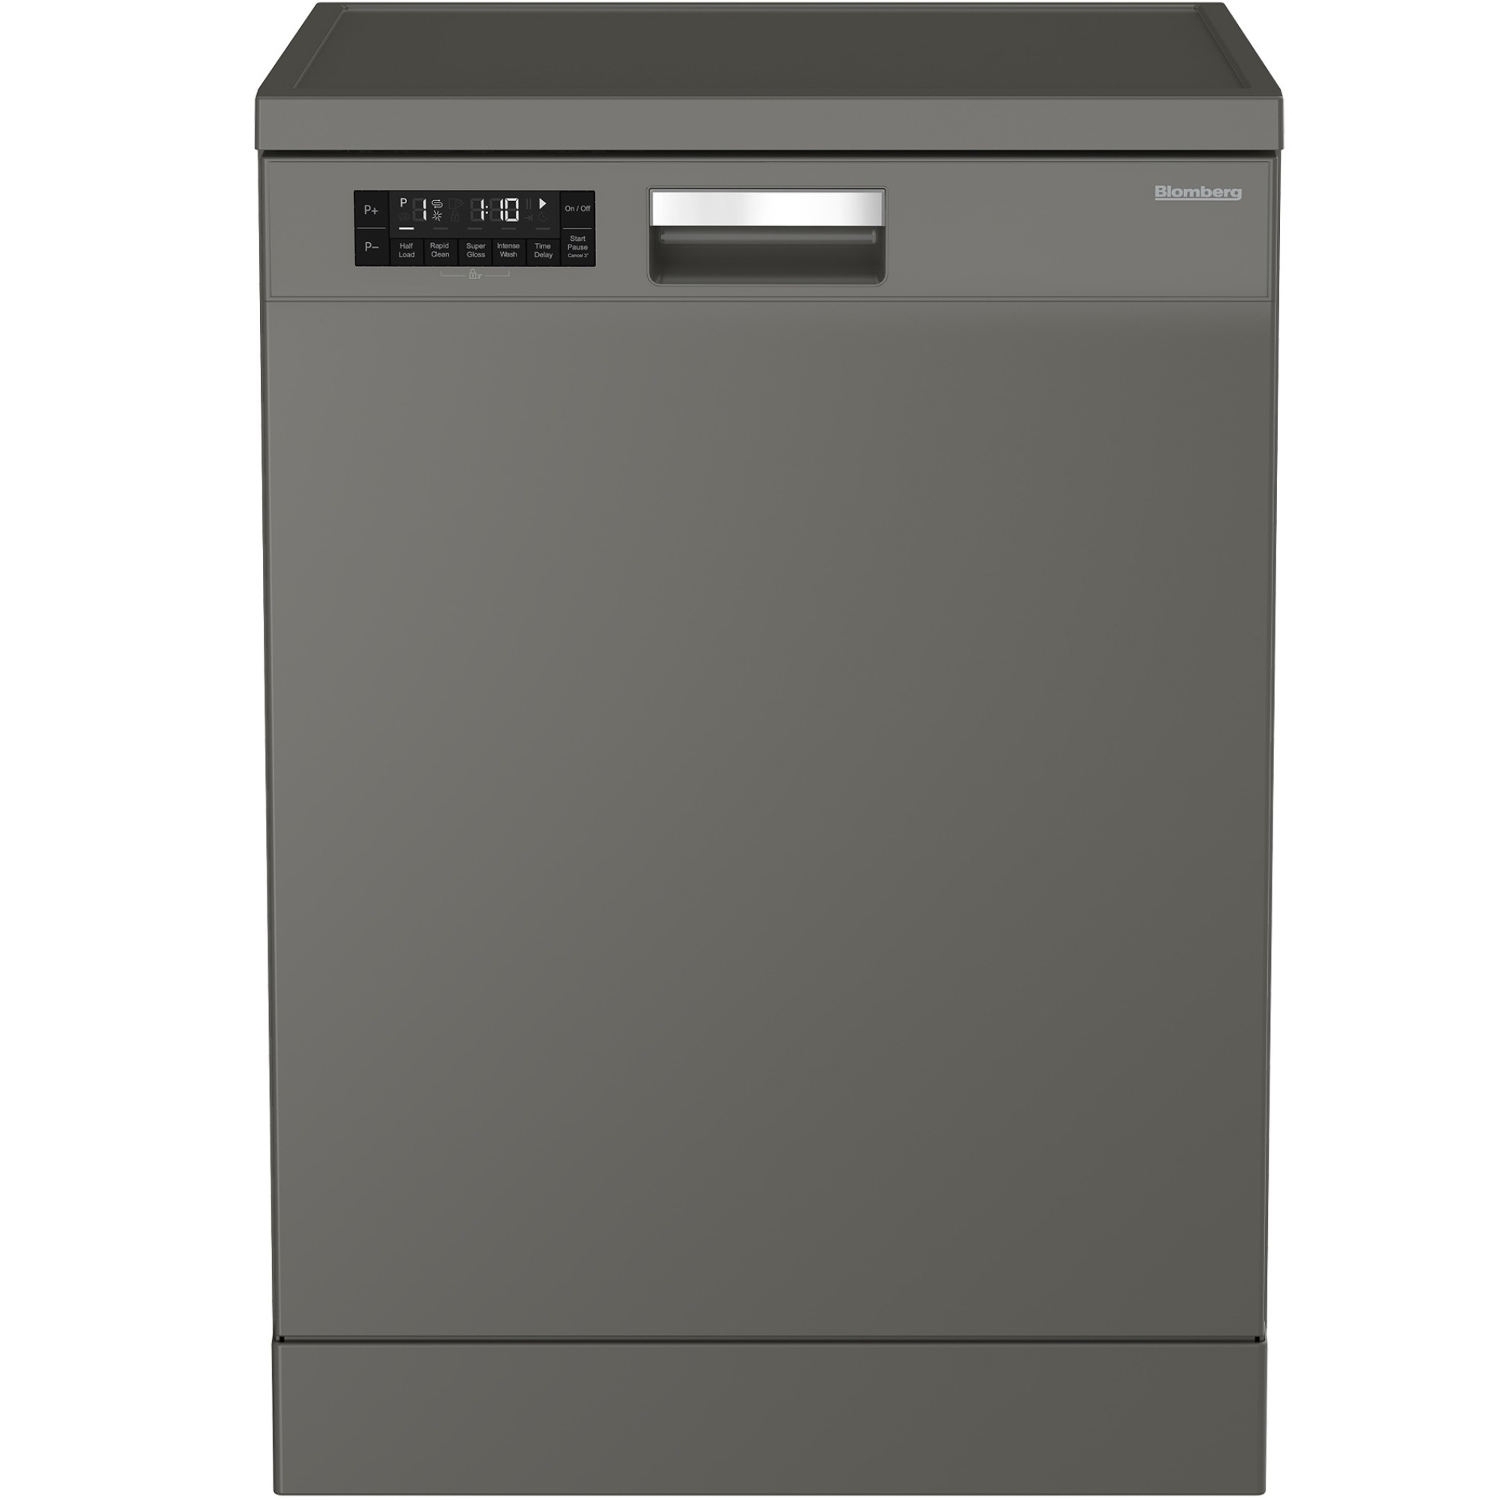 Blomberg LDF42240G Full Size Dishwasher - Graphite - 14 Place Settings - 0